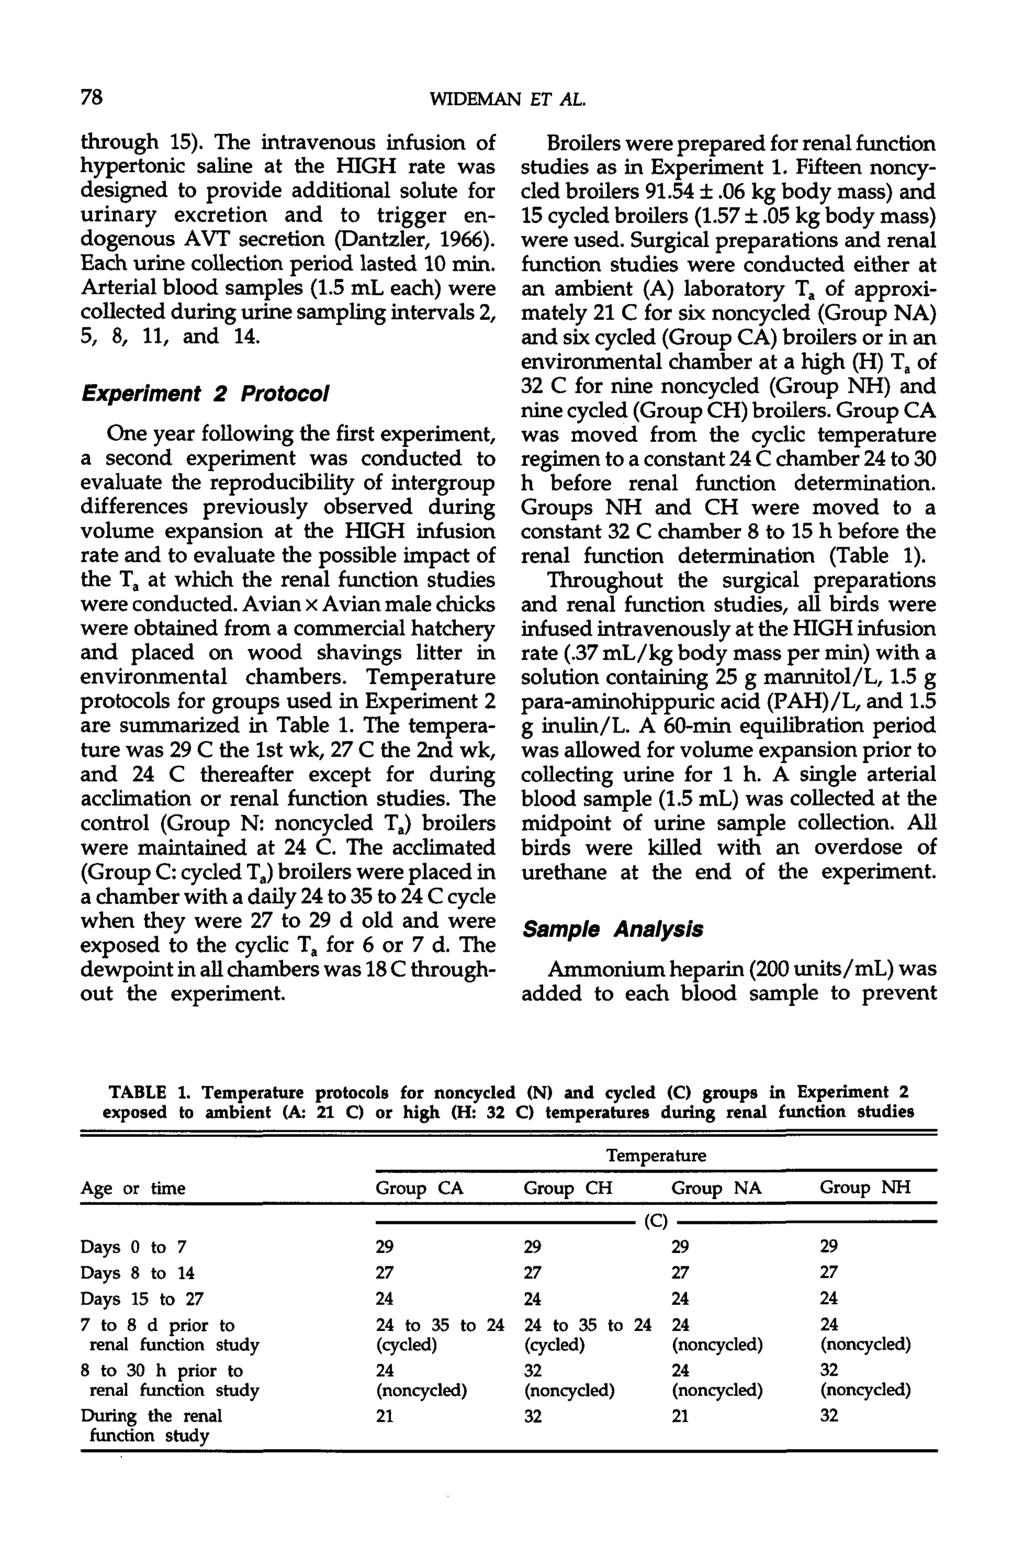 78 WIDEMA ET AL. thrugh 15). The intravenus infusin f hypertnic saline at the HIGH rate was designed t prvide additinal slute fr urinary excretin and t trigger endgenus AVT secretin (Dantzler, 1966).